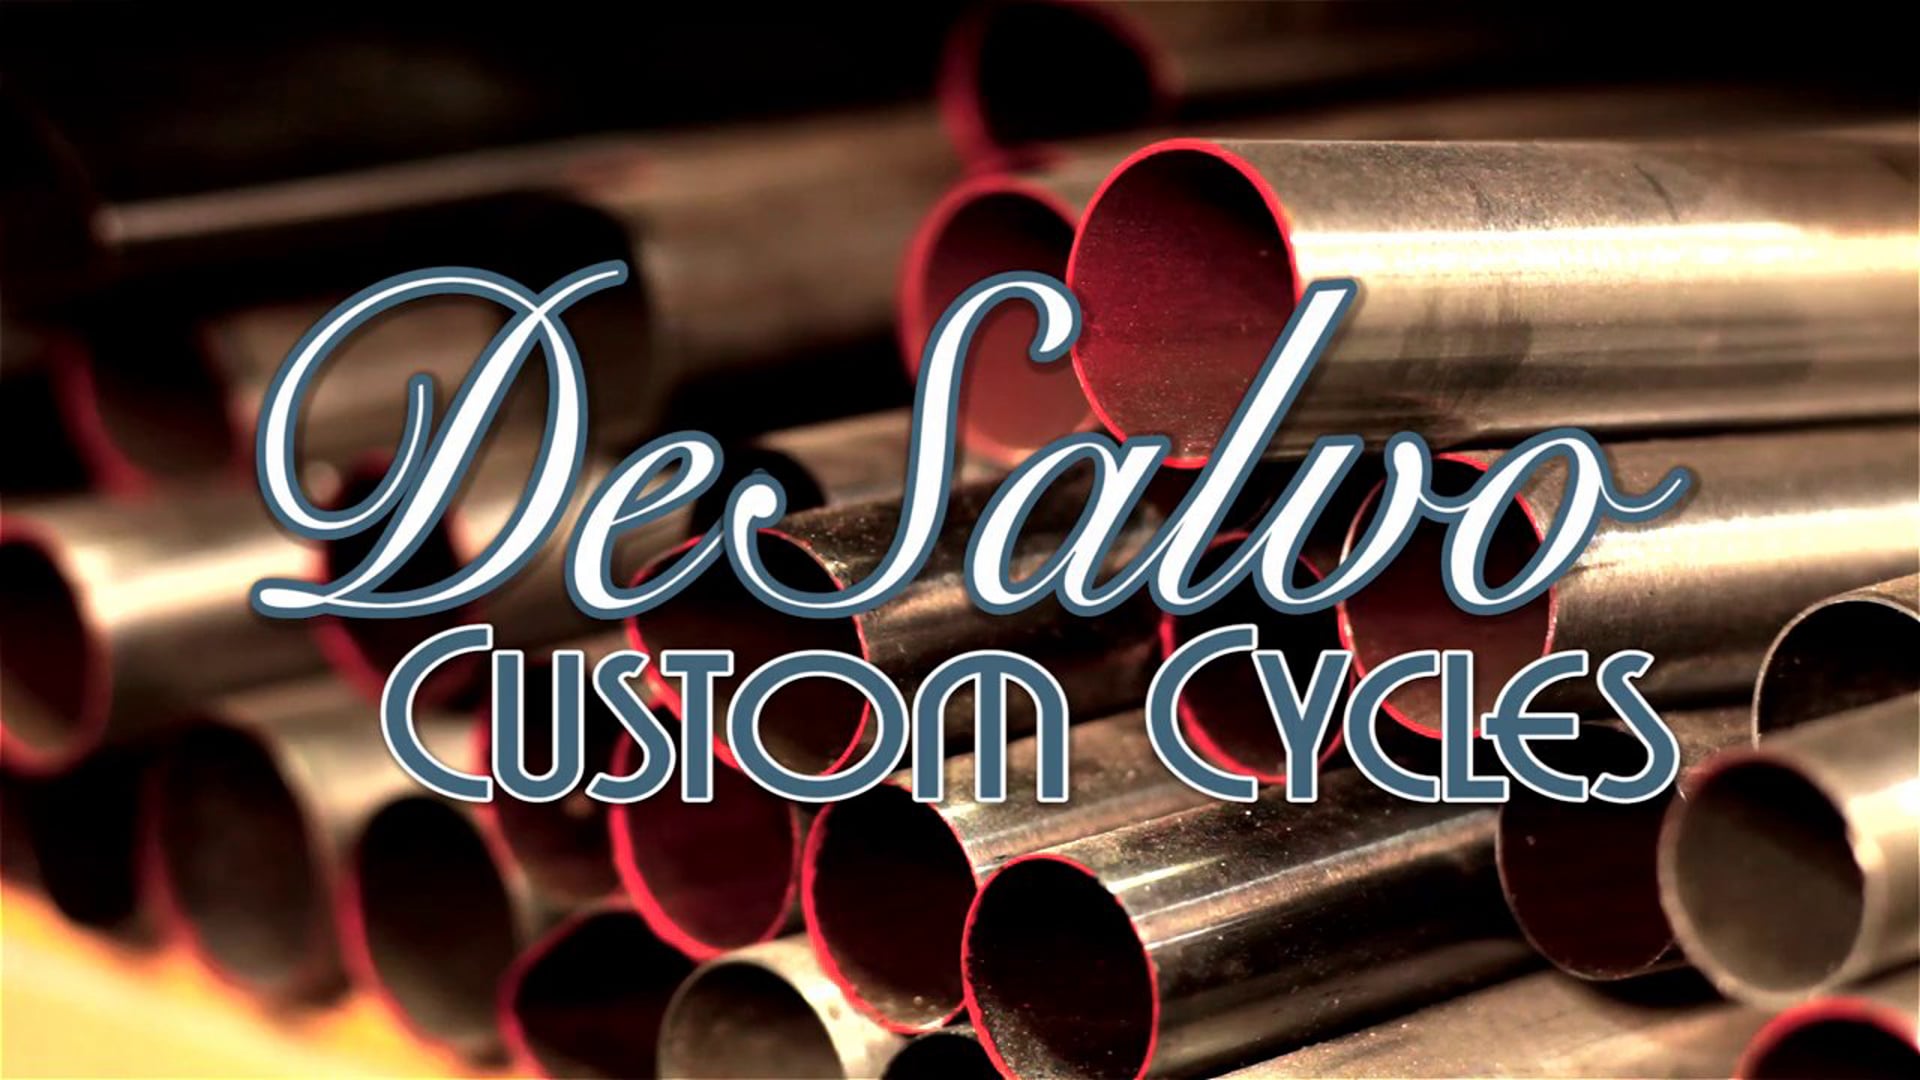 DeSalvo Custom Cycles - Ashland, Oregon - Short Documentary